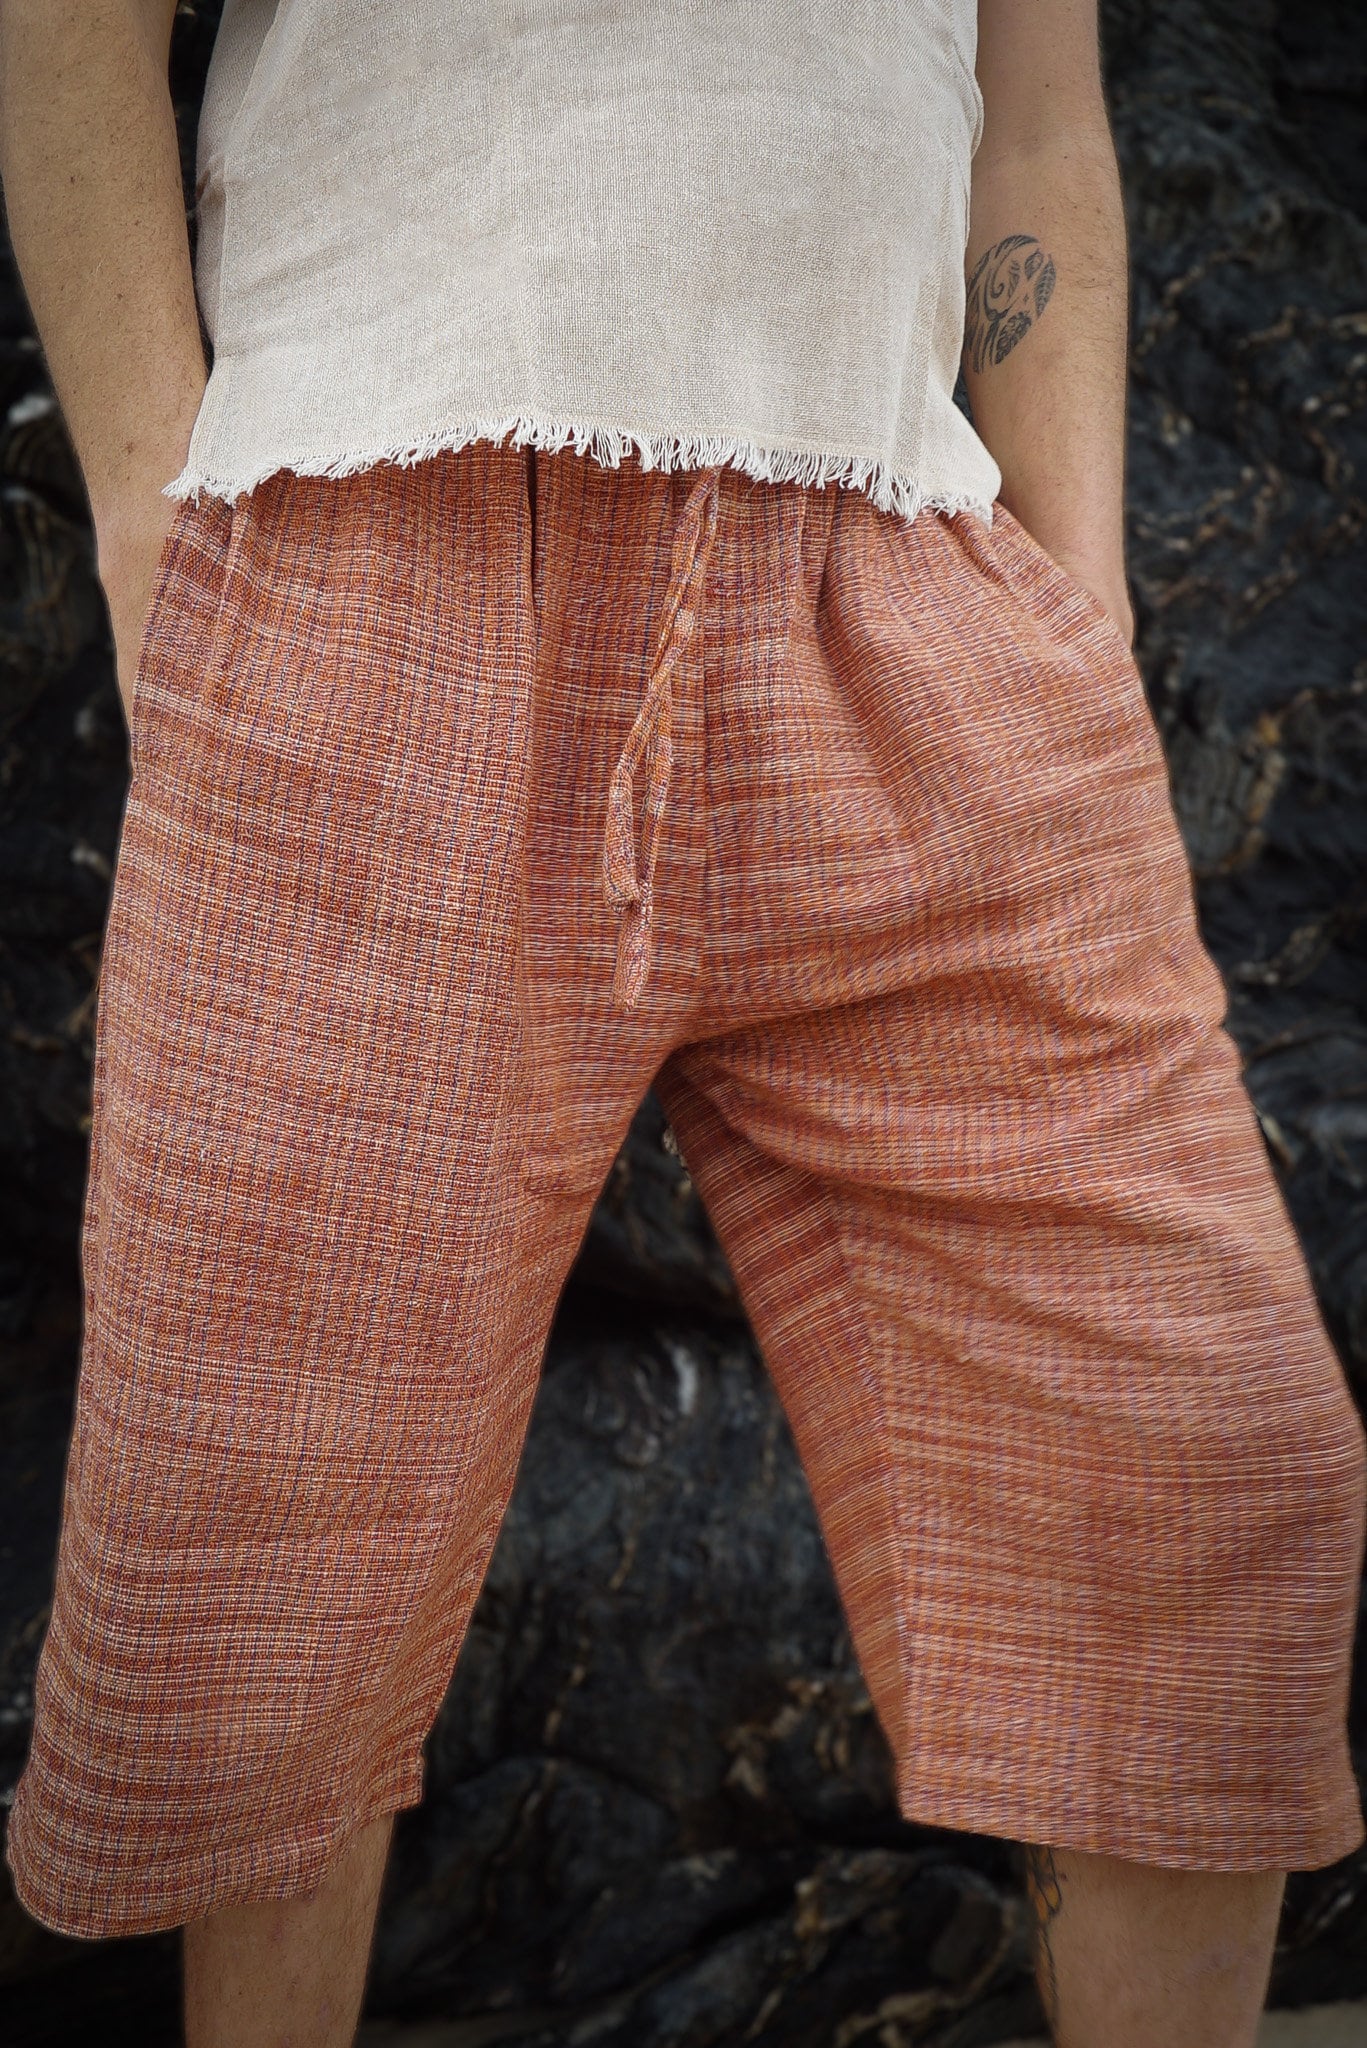 Regular Fit Linen trousers - Khaki green - Men | H&M IN